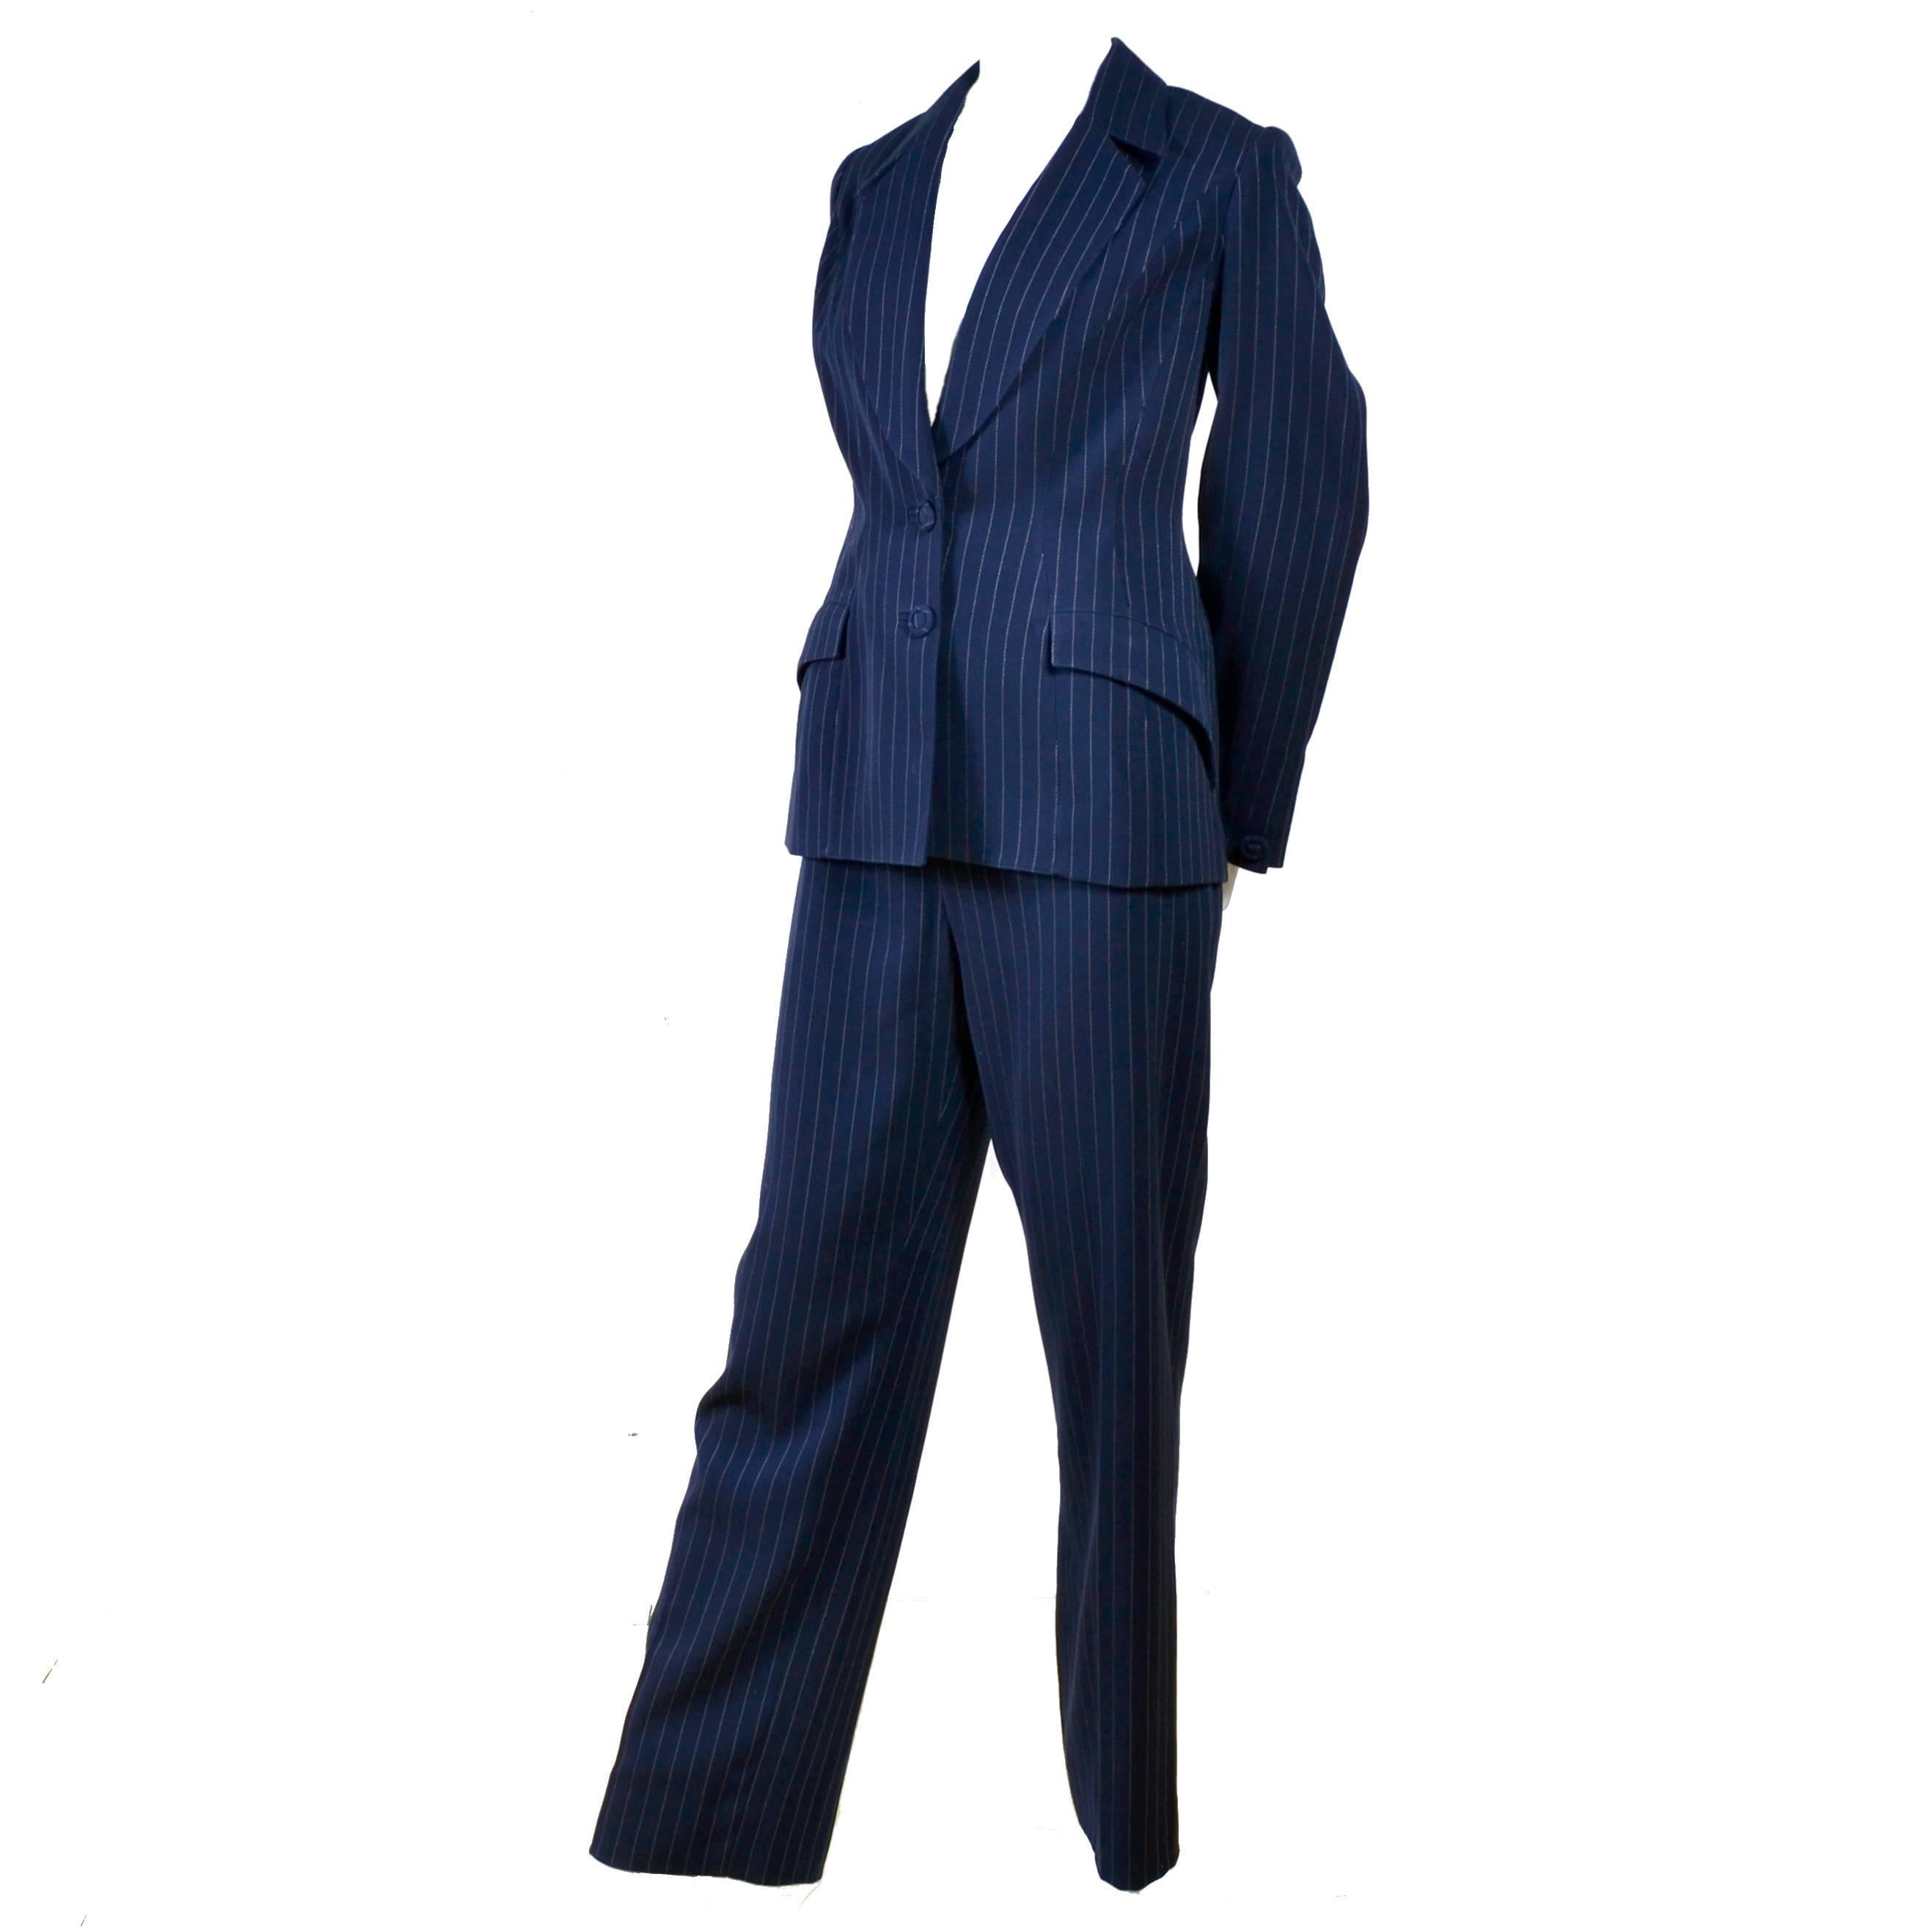 Thierry Mugler Vintage Suit in Pinstripe Dark Navy Blue Wool High Waist Trousers